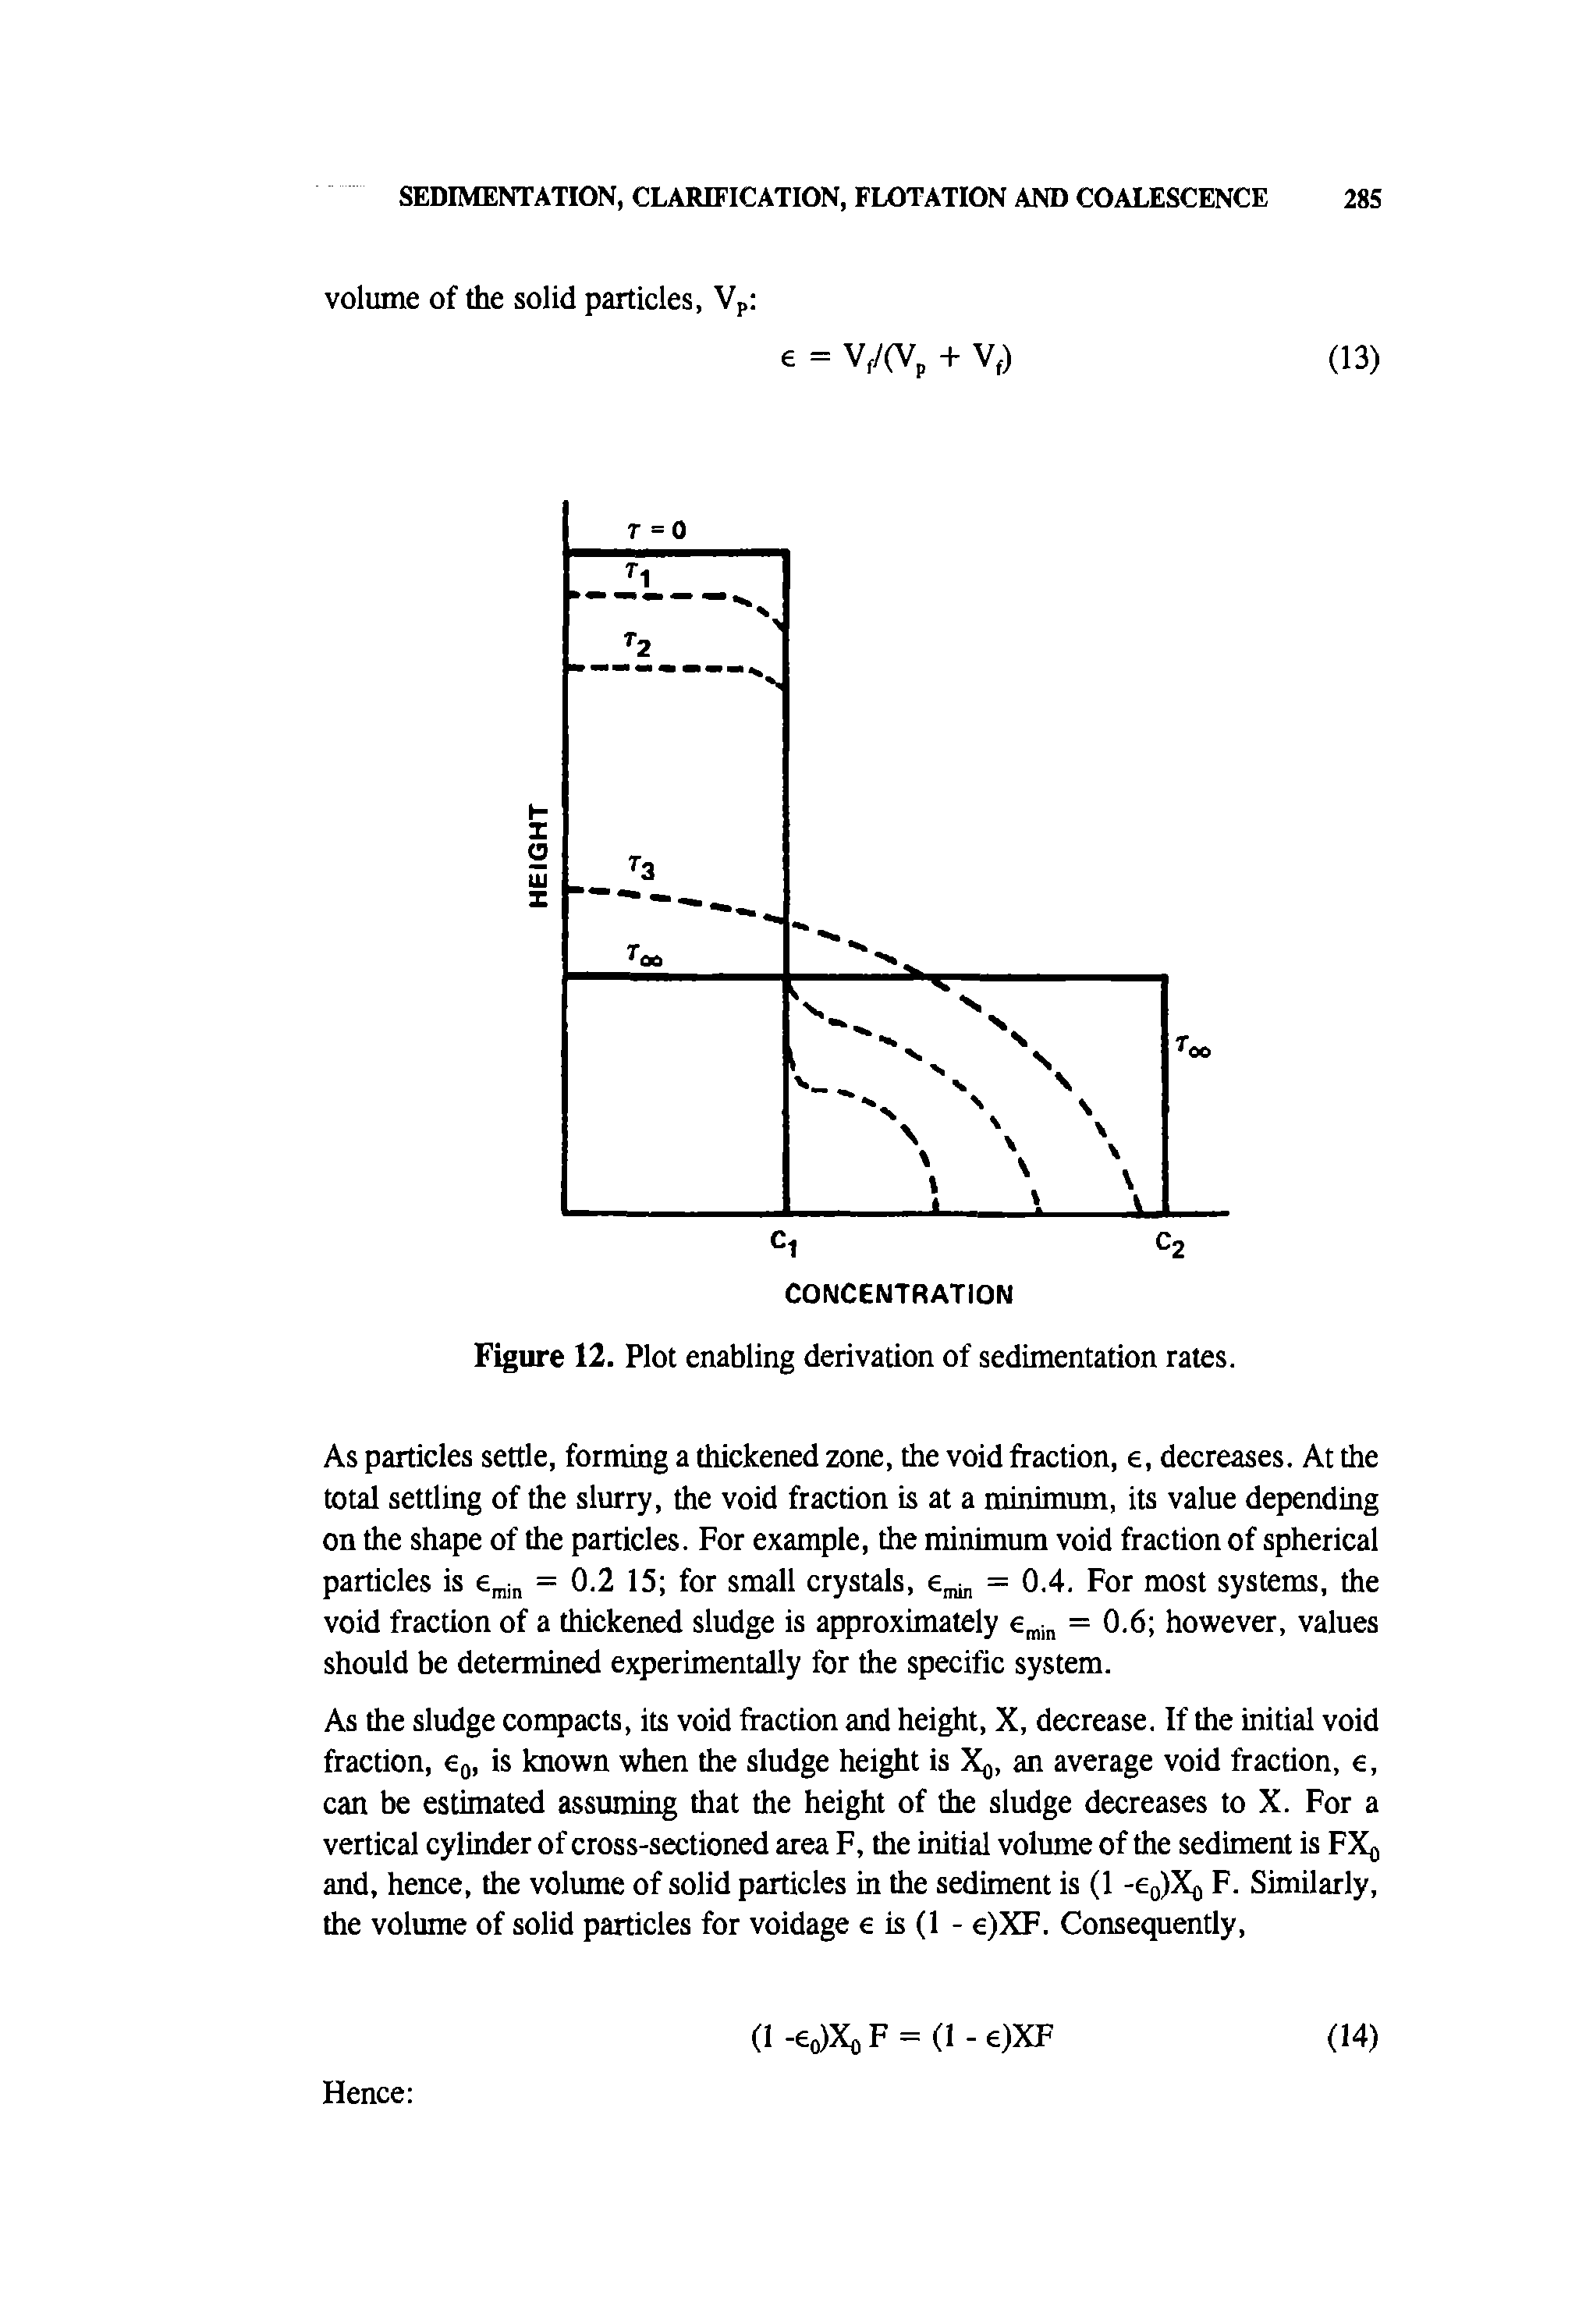 Figure 12. Plot enabling derivation of sedimentation rates.